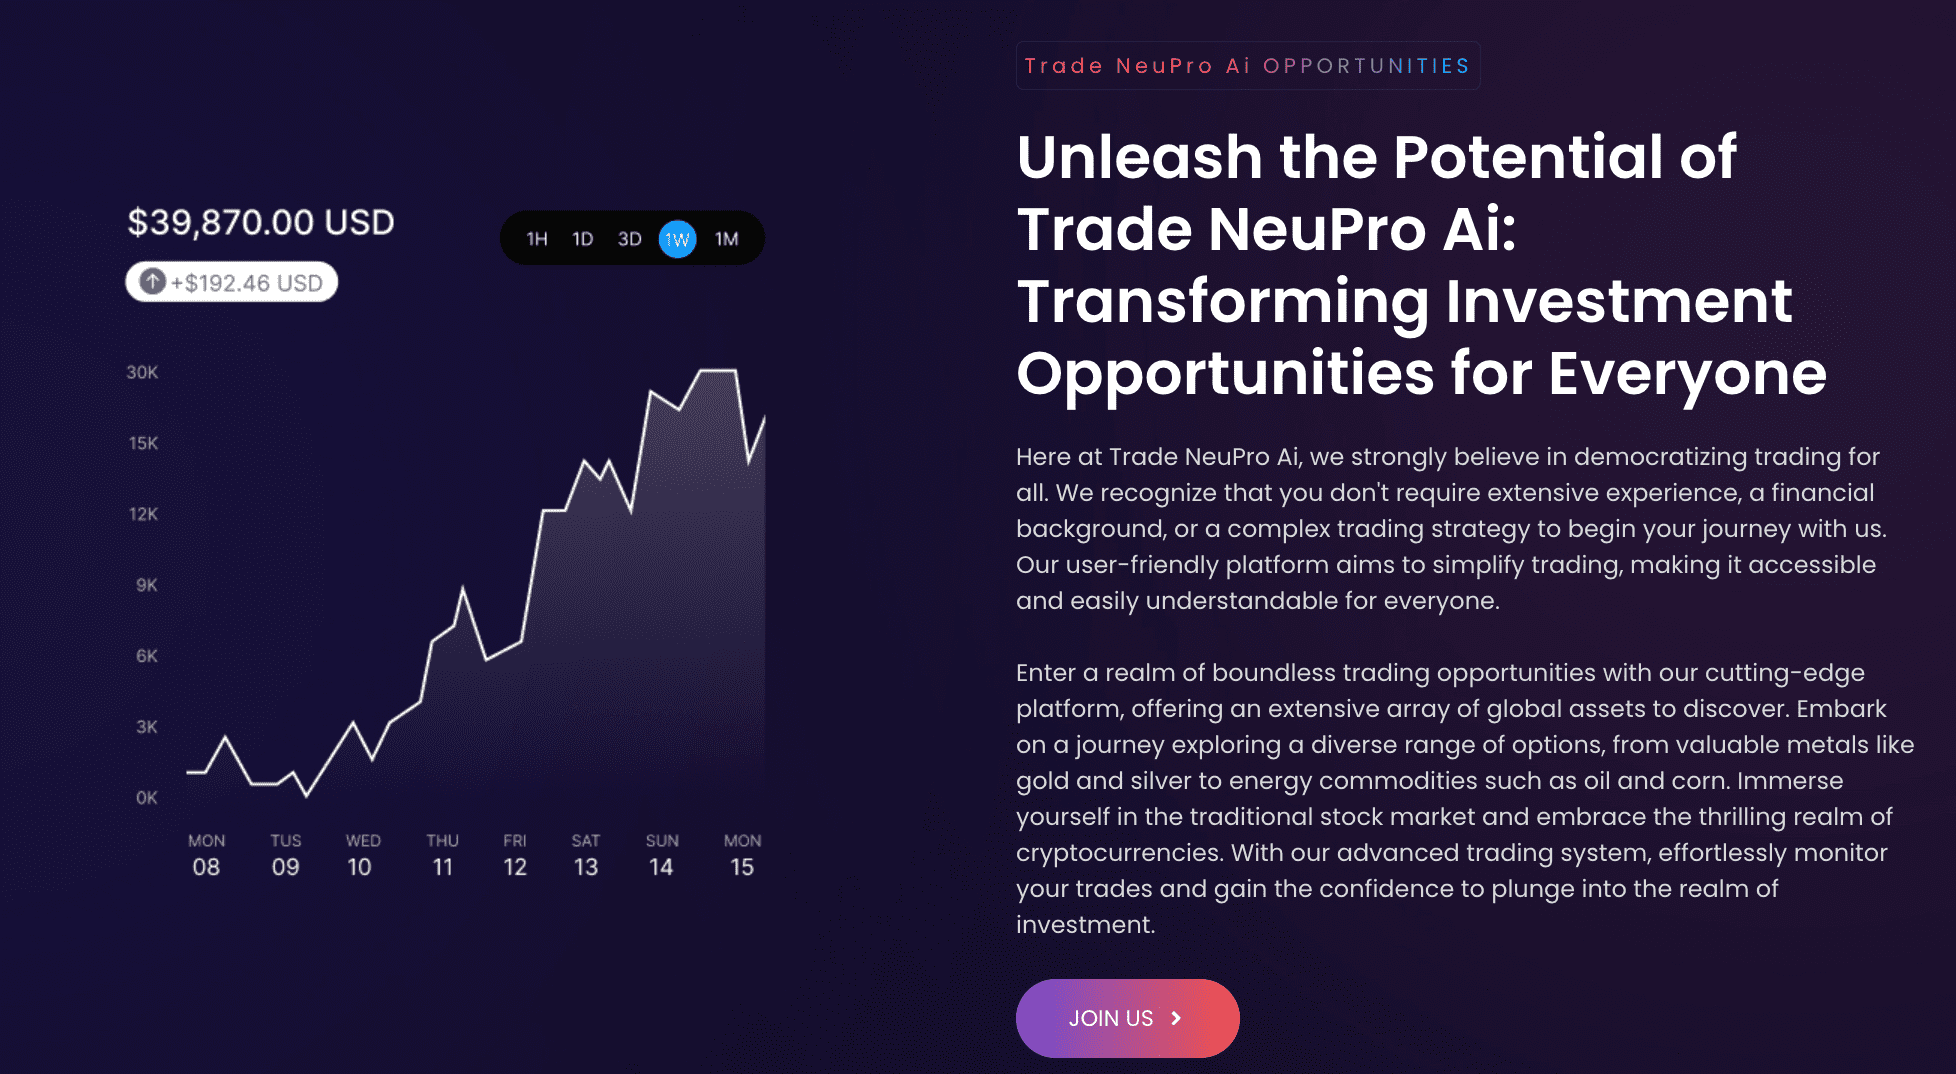 Trade i2 NeuPro (Model 2X) opportunities